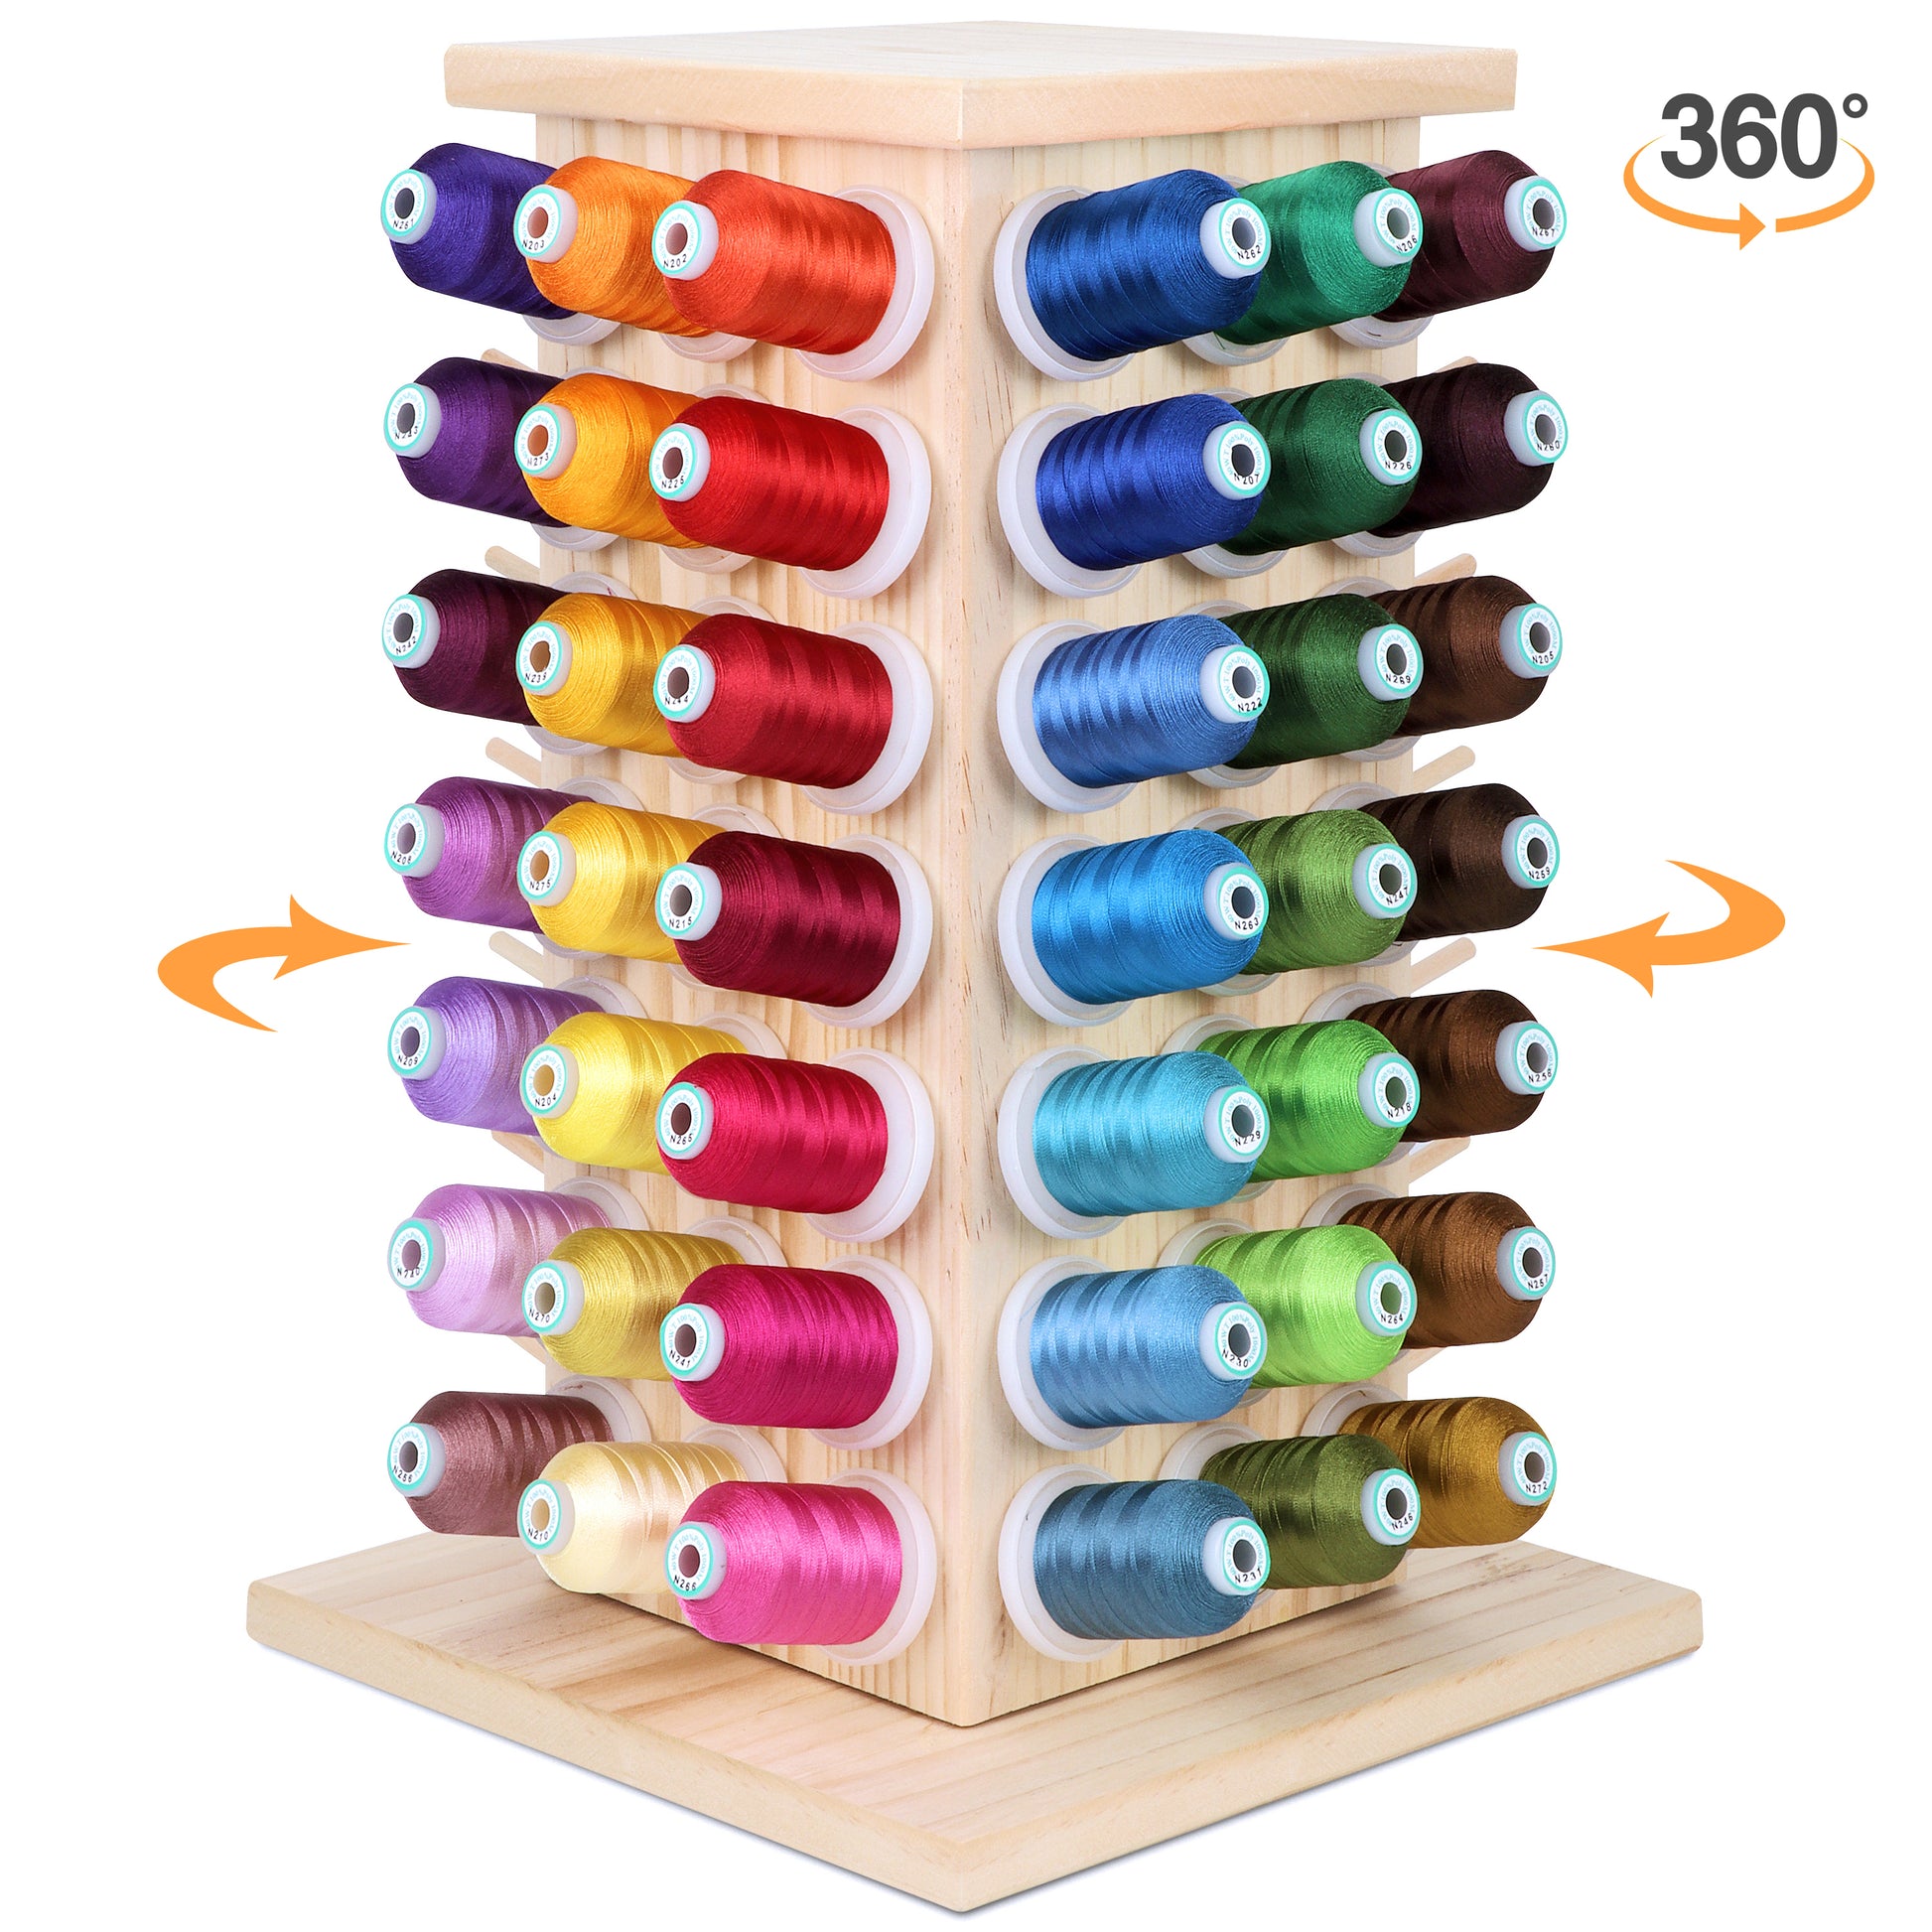 New brothread 84 Spools 360° Fully Rotating Wooden Thread Rack /Thread